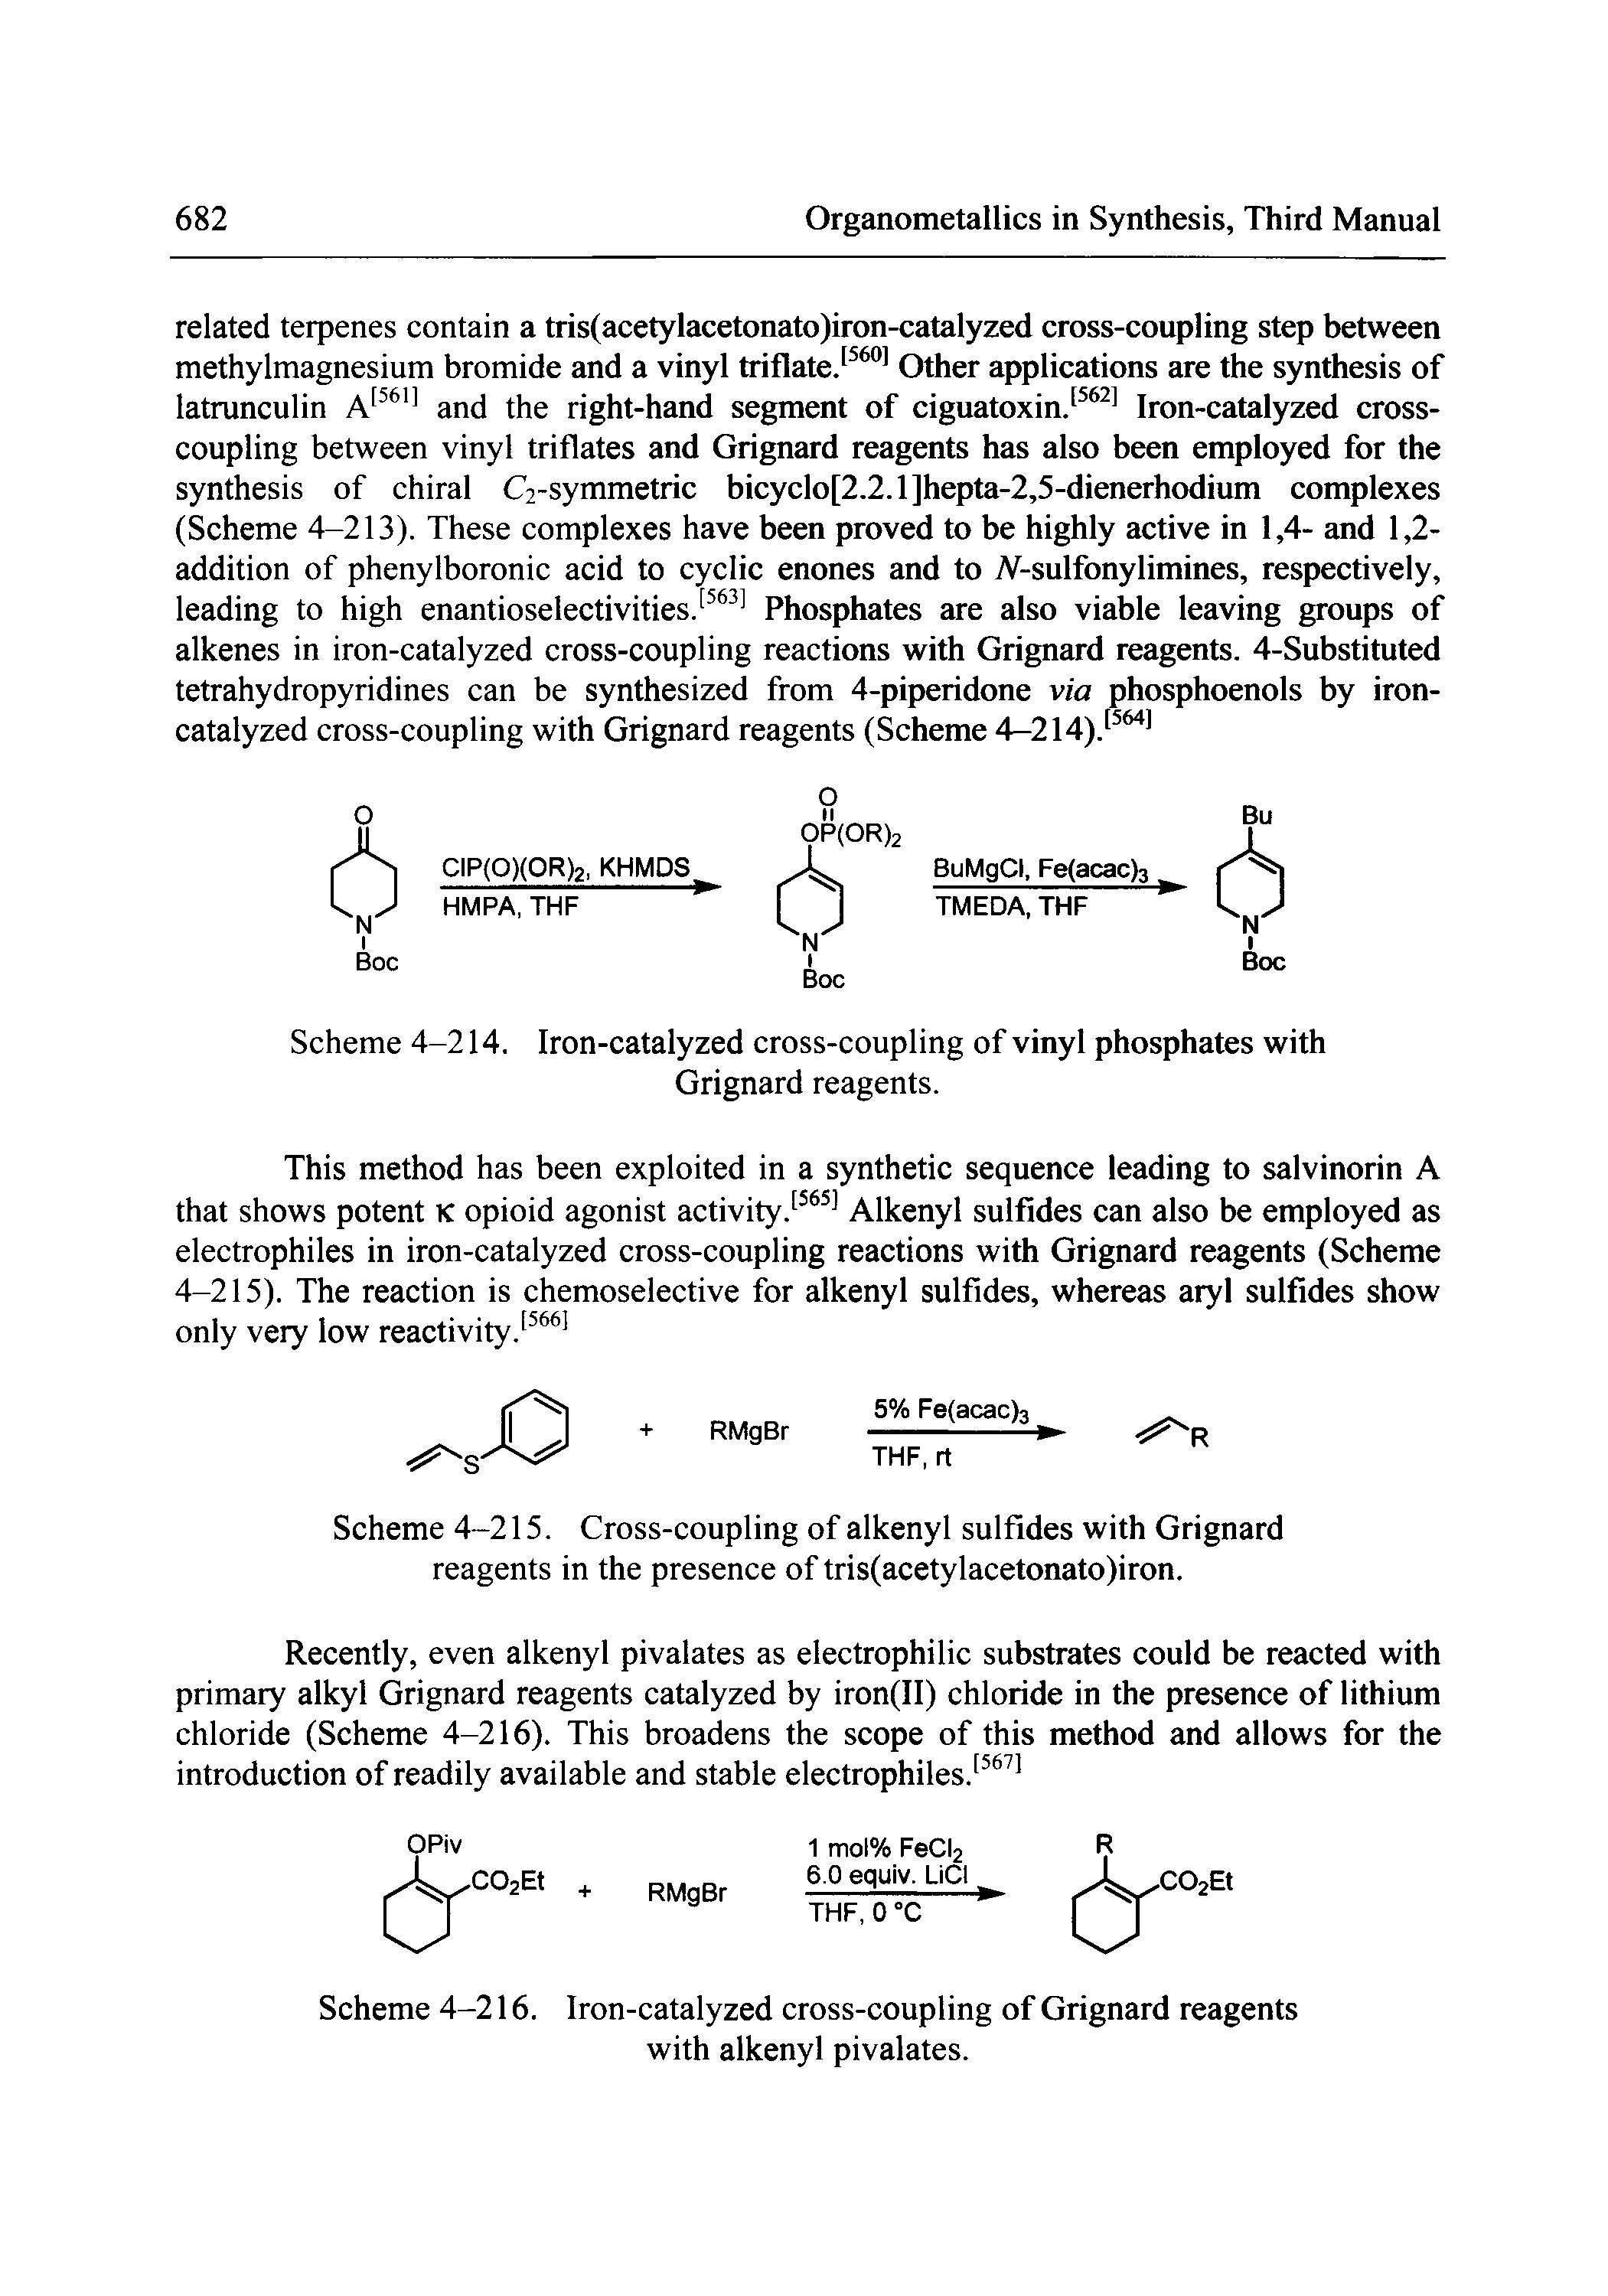 Scheme 4-216. Iron-catalyzed cross-coupling of Grignard reagents with alkenyl pivalates.